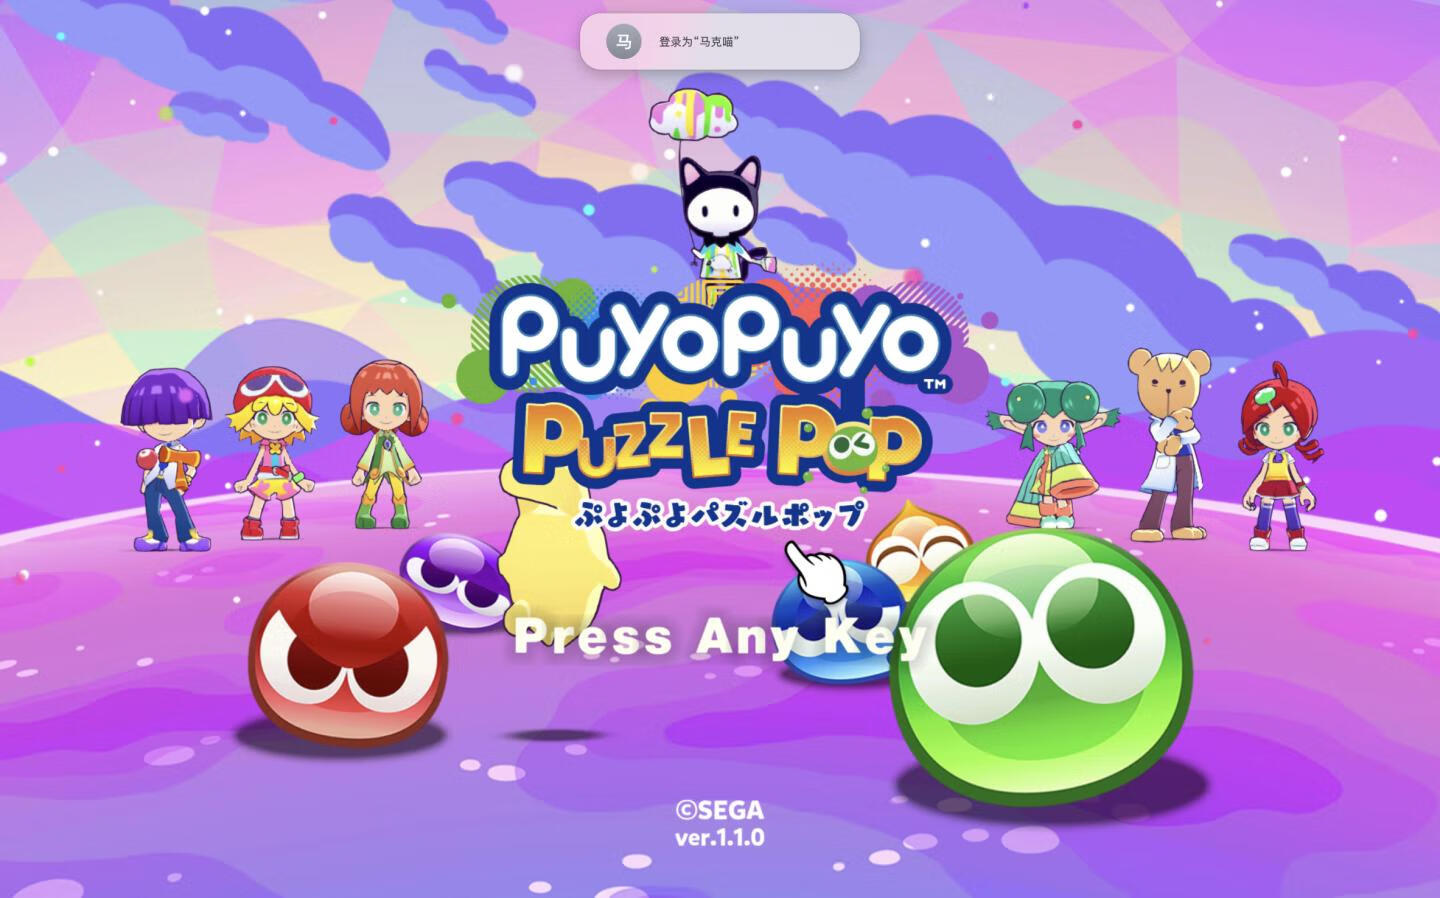 噗哟噗哟益智消消乐 Puyo Puyo Puzzle Pop for Mac v1.1 中文原生版